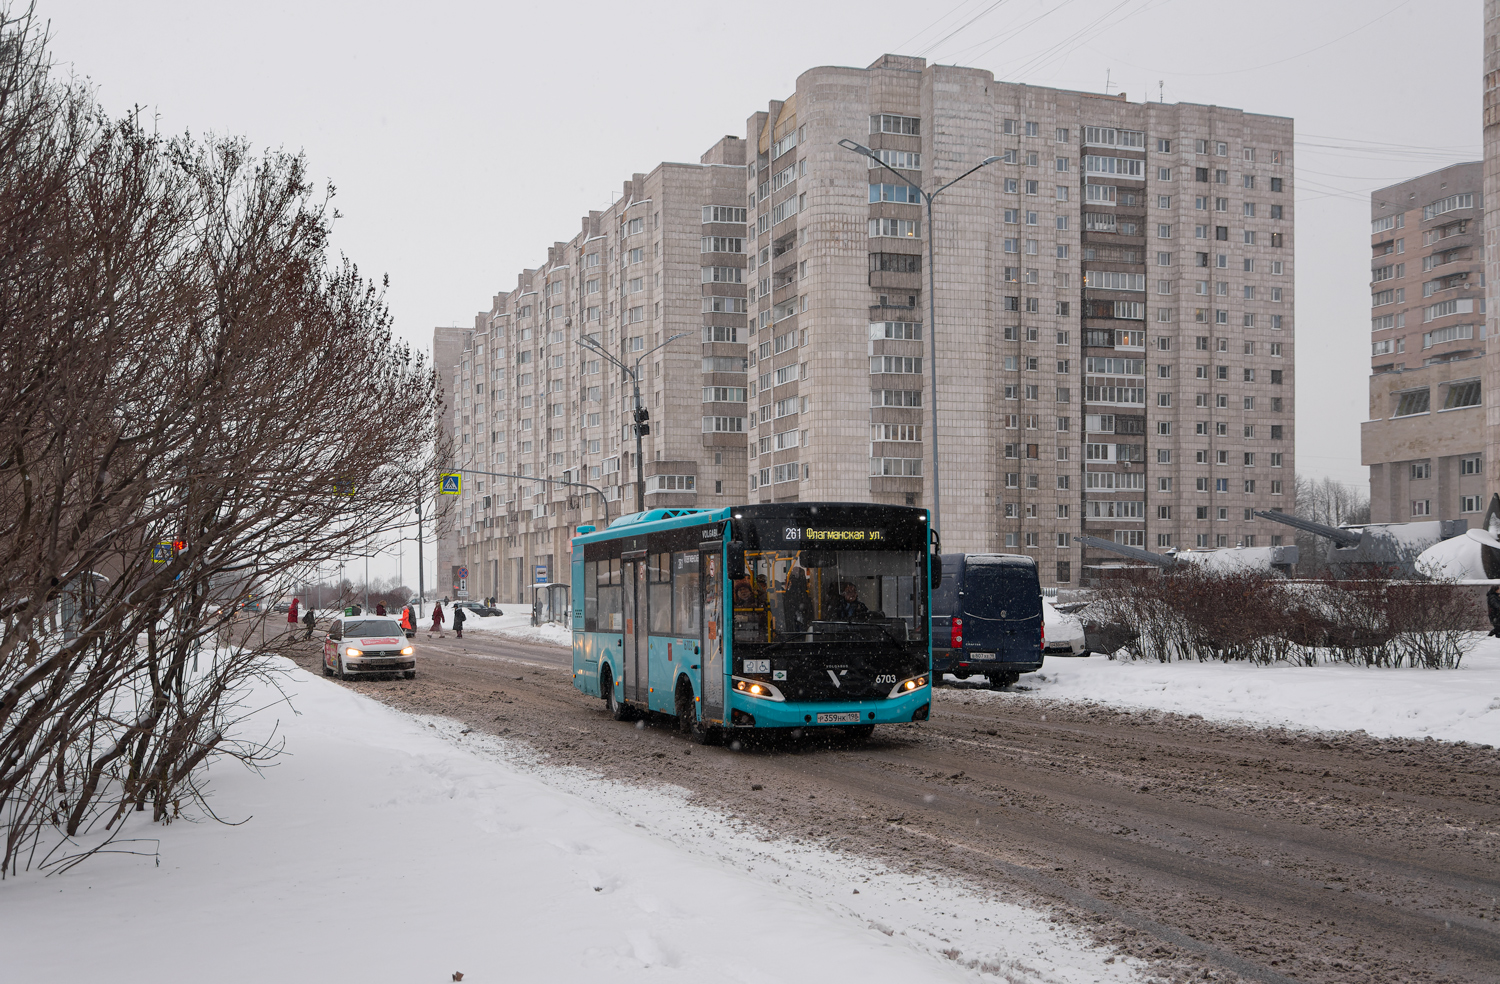 Saint Petersburg, Volgabus-4298.G4 (LNG) # 6703